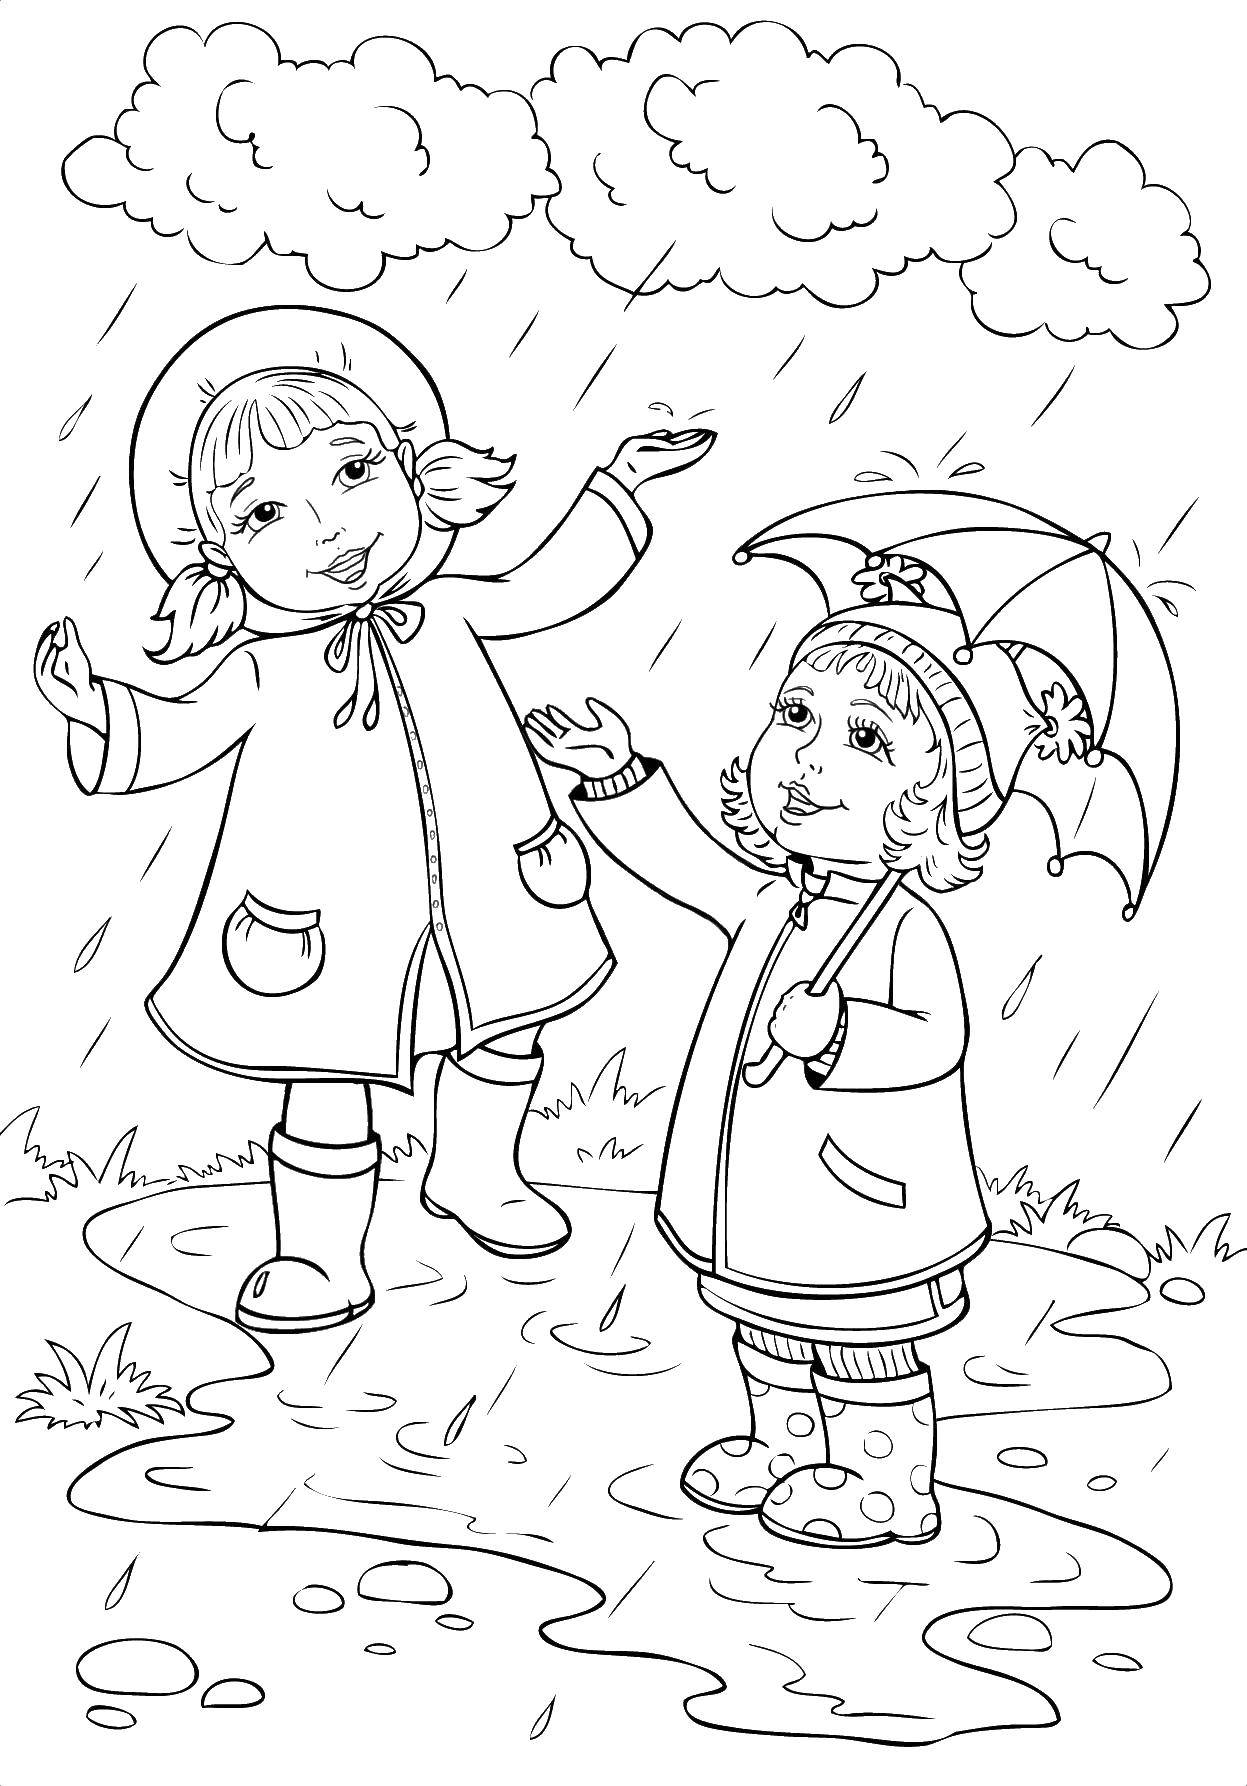 Coloring Girls in the rain. Category autumn. Tags:  fall, rain, girls.